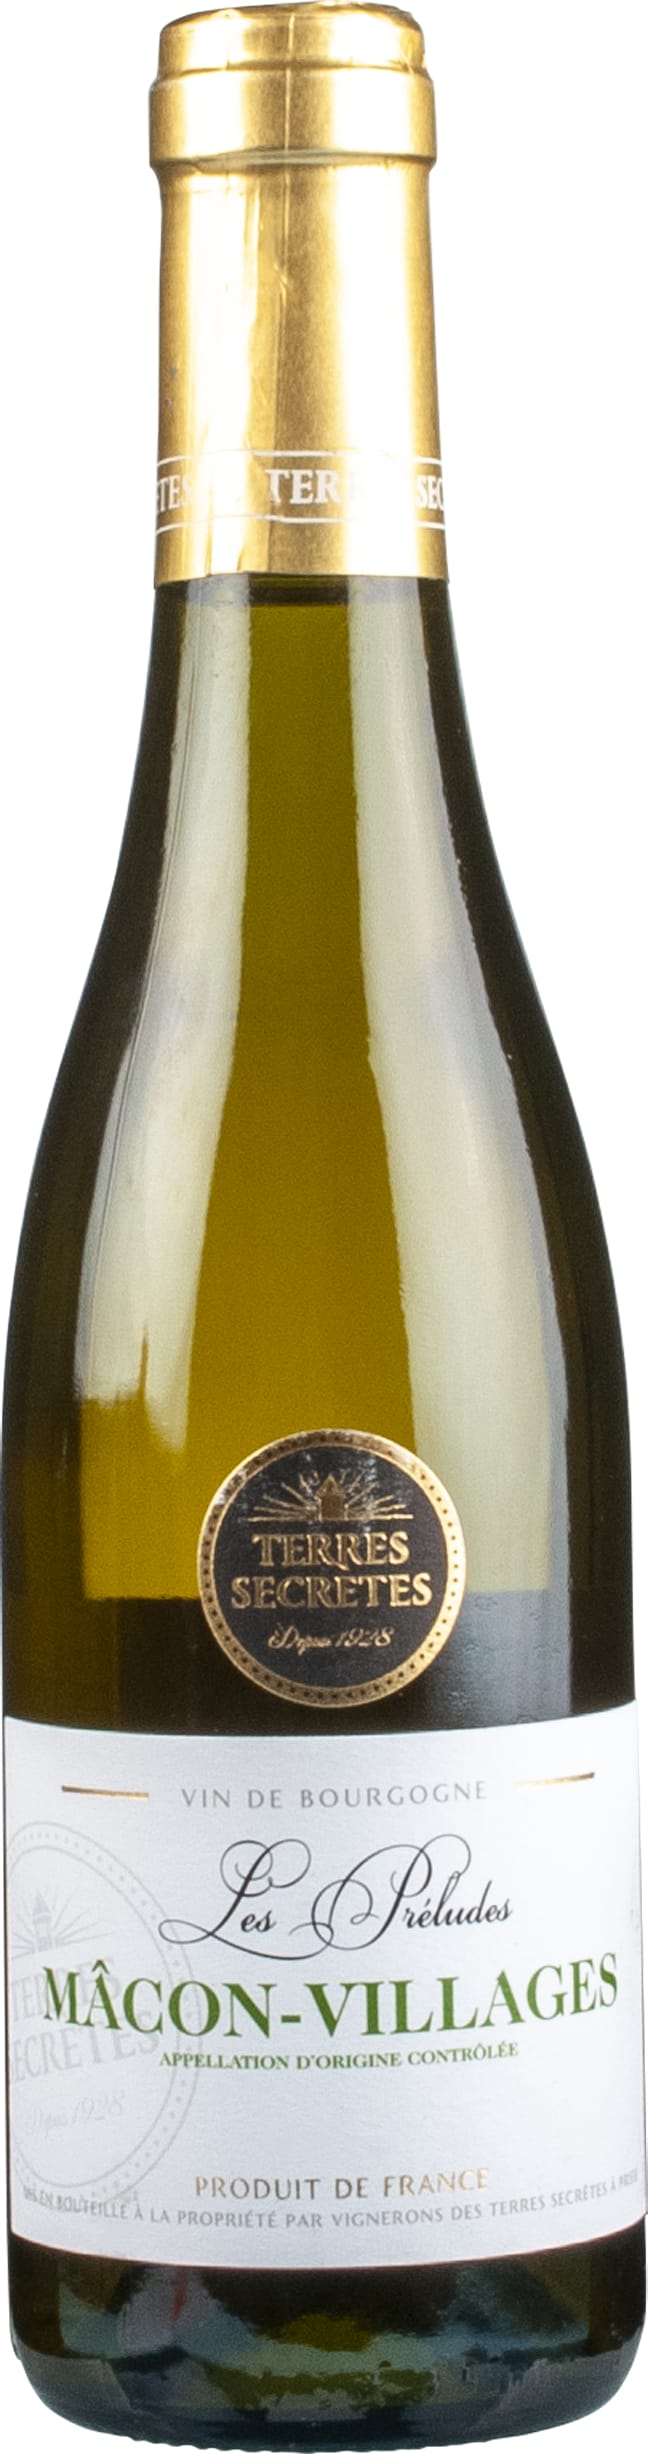 Vignerons des Terres Secretes Macon-Villages Les Preludes, 375cl bottle 2021 37.5cl - Buy Vignerons des Terres Secretes Wines from GREAT WINES DIRECT wine shop